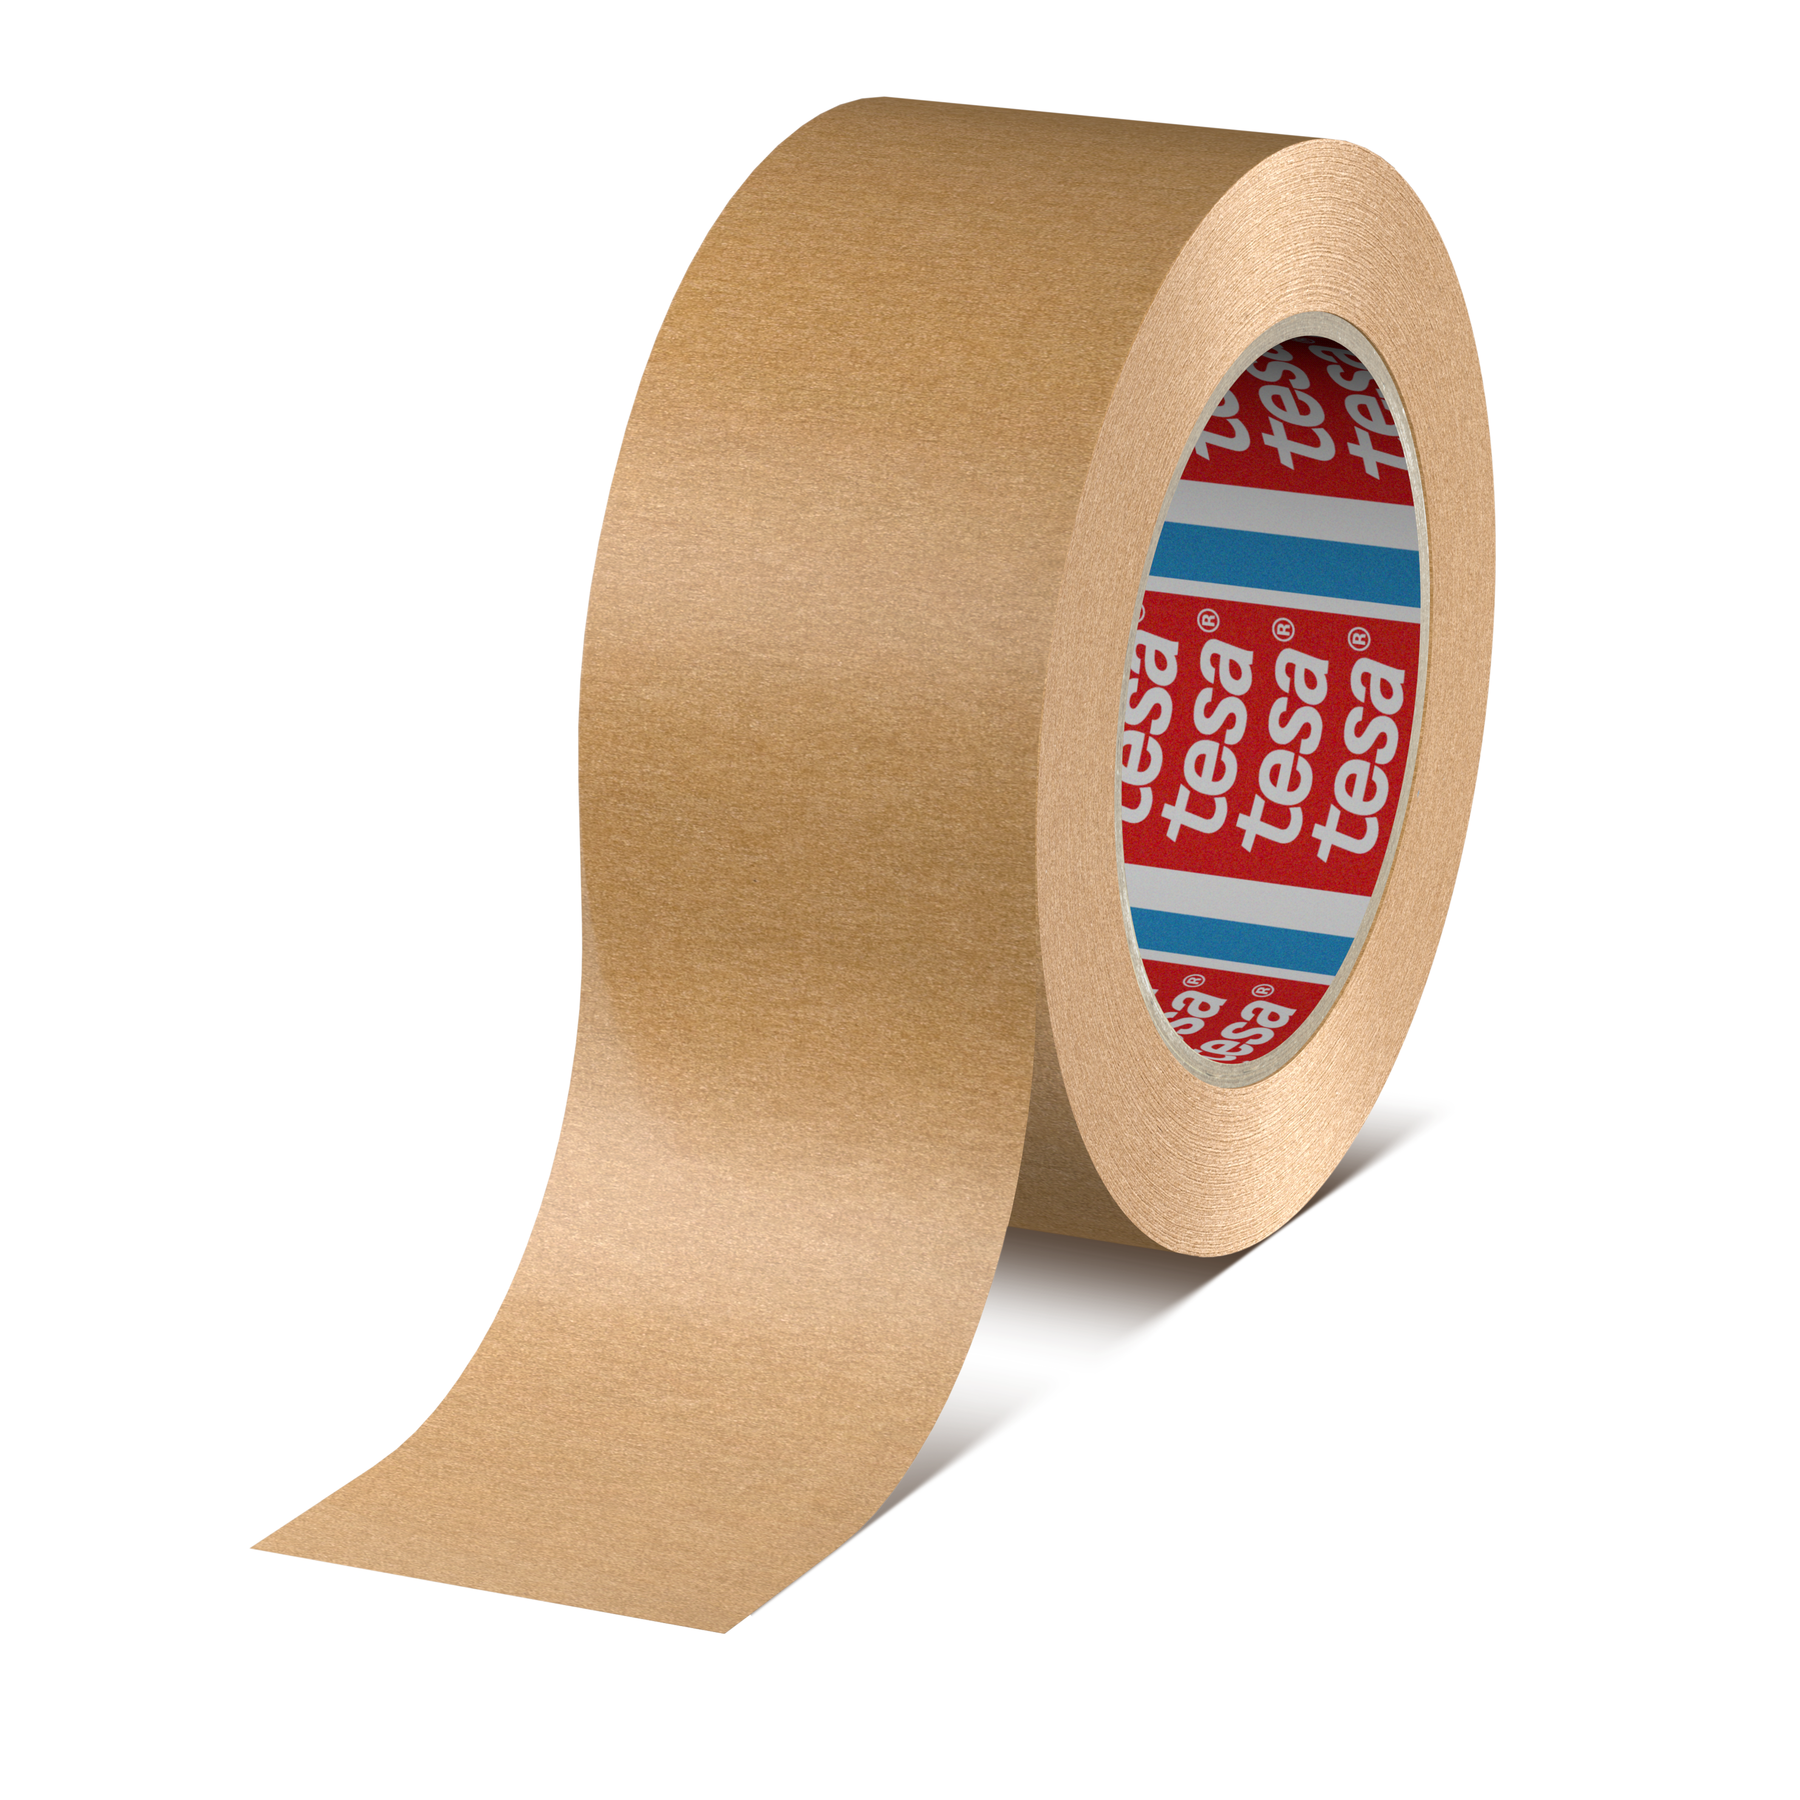 Snoep Ver weg kampioen Papier tape 50mmx50mtr eco rubber belijming, tesa 4713 - Moonen Direct